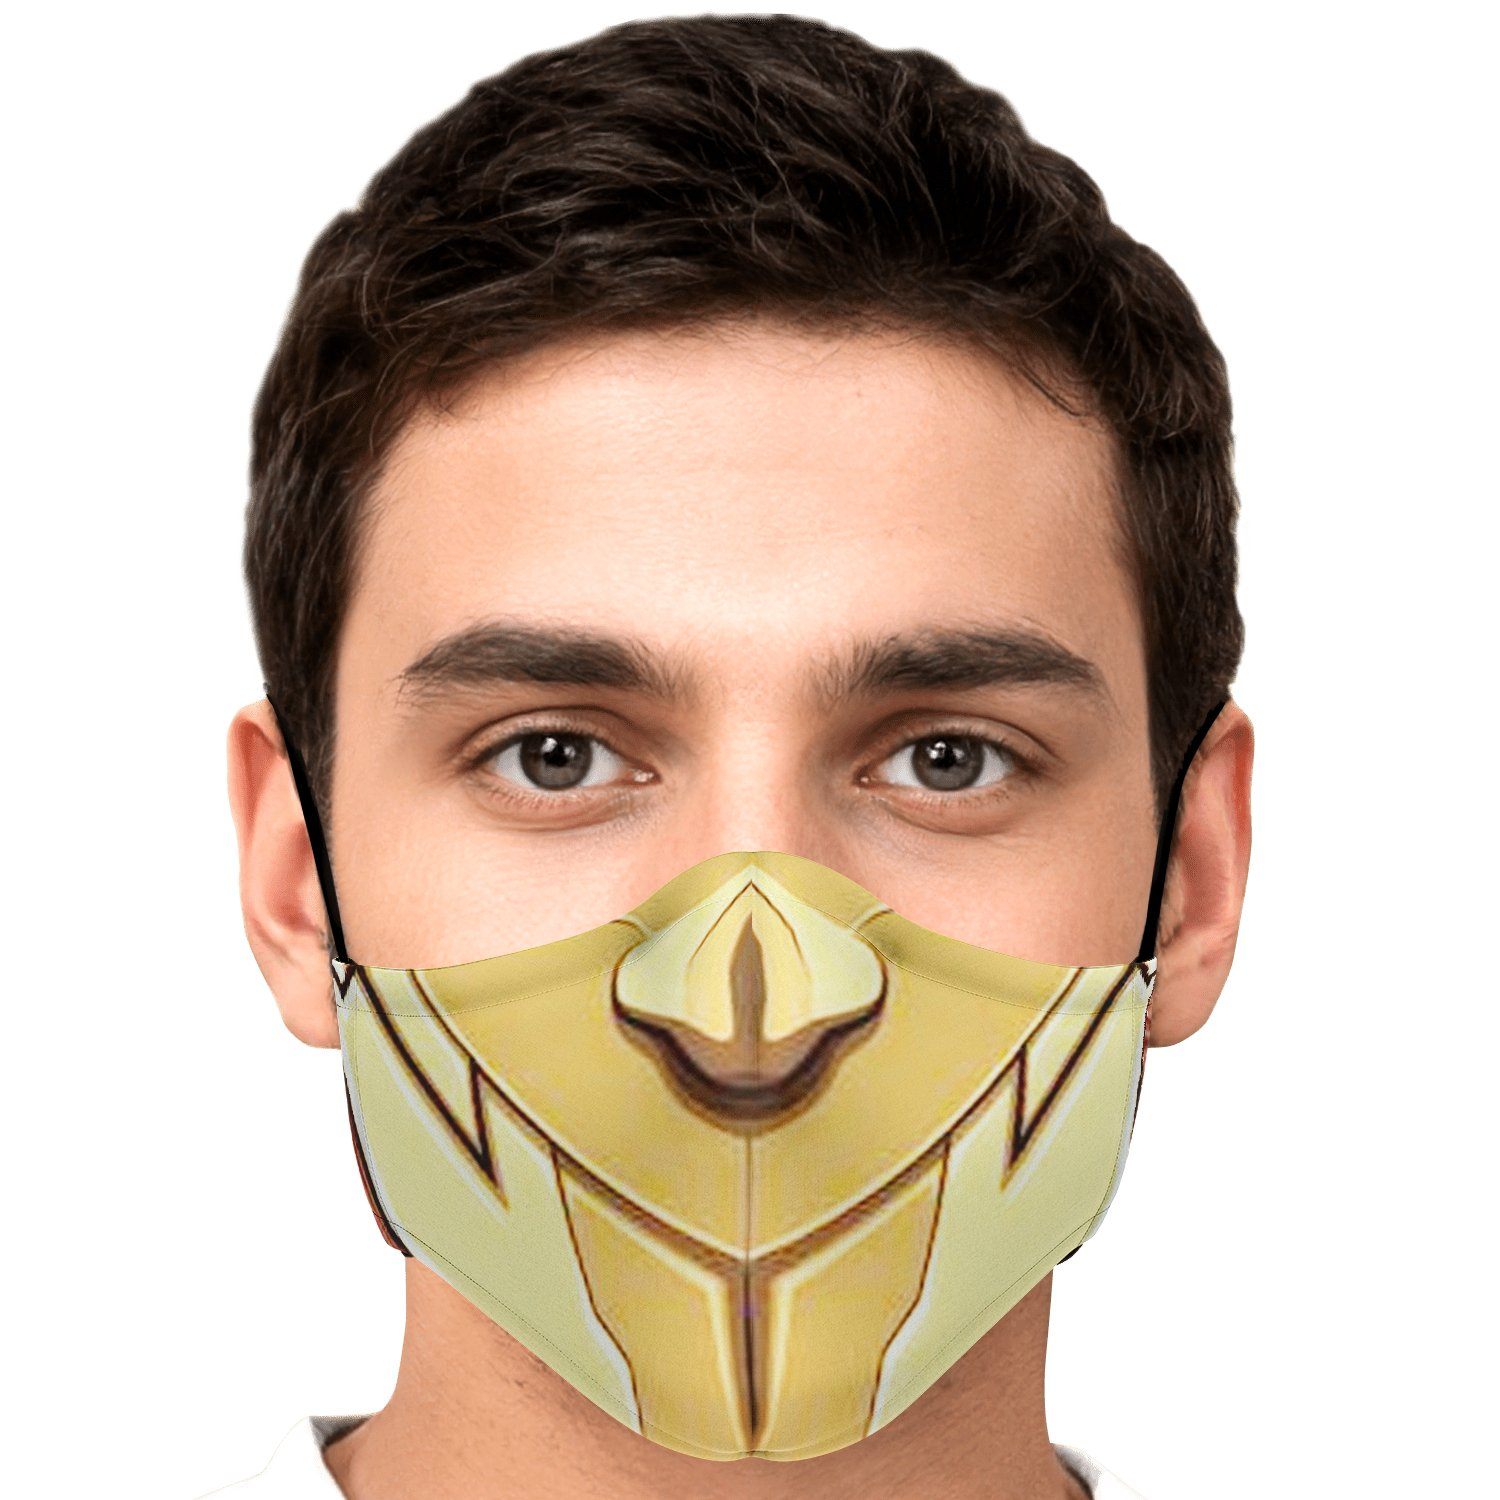 armored titan attack on titan premium carbon filter face mask 768015 2 - Attack On Titan Store